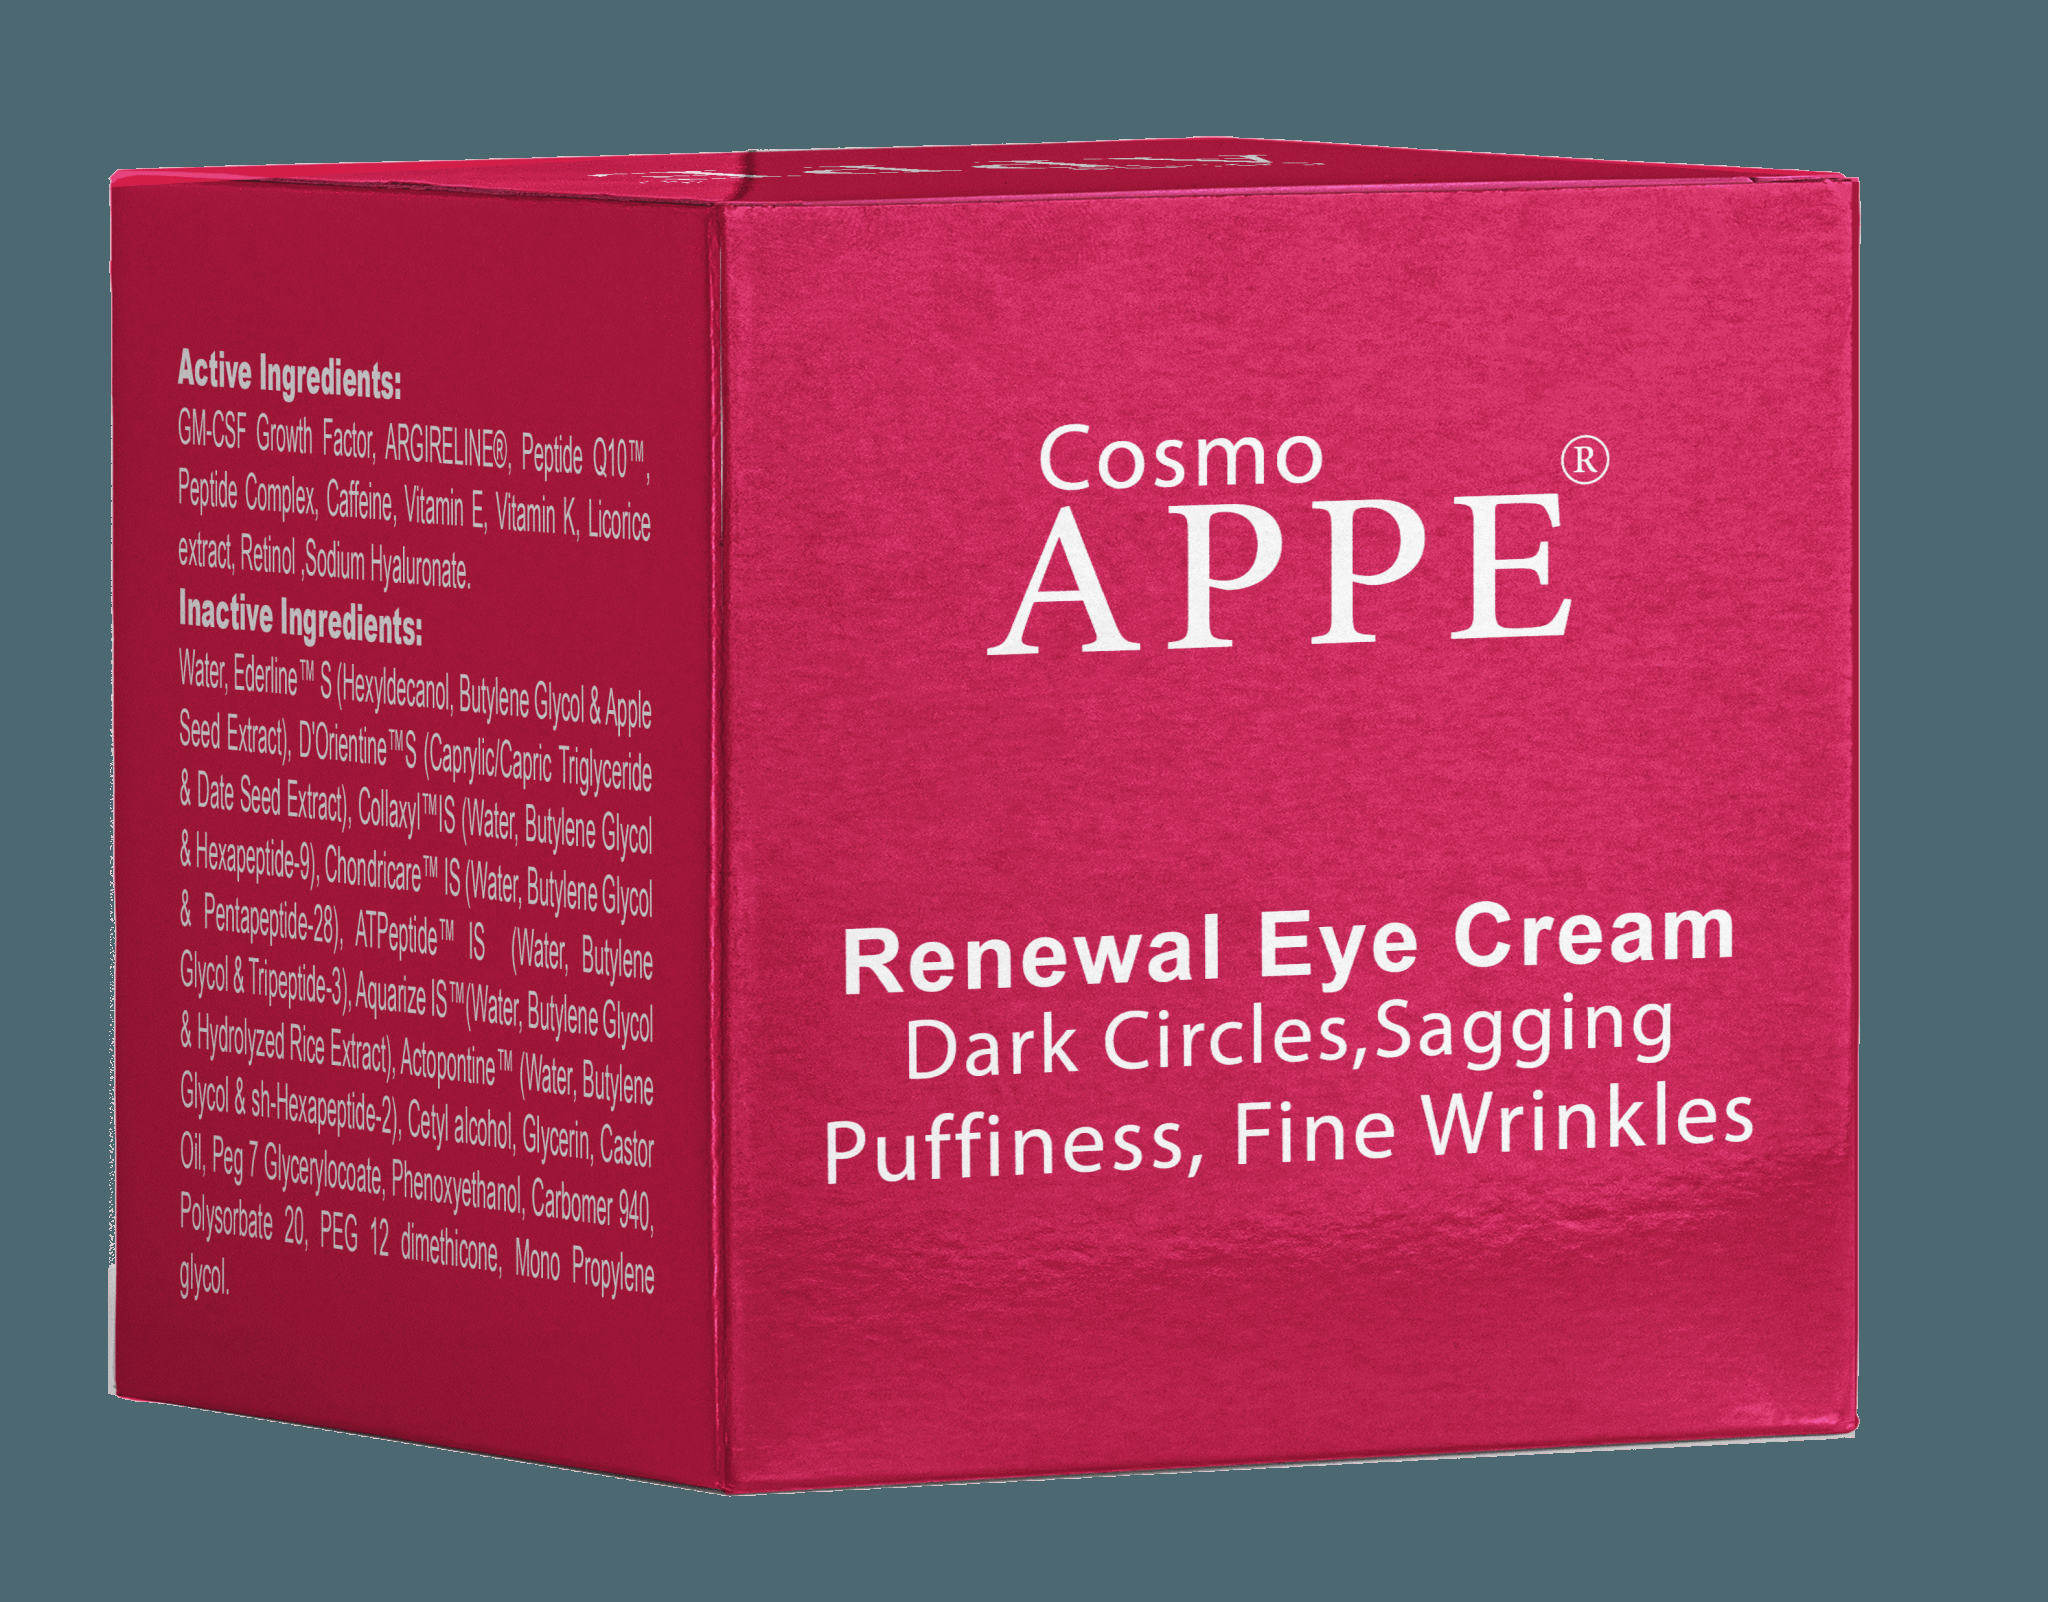 Aape renewal face cream 50 ml